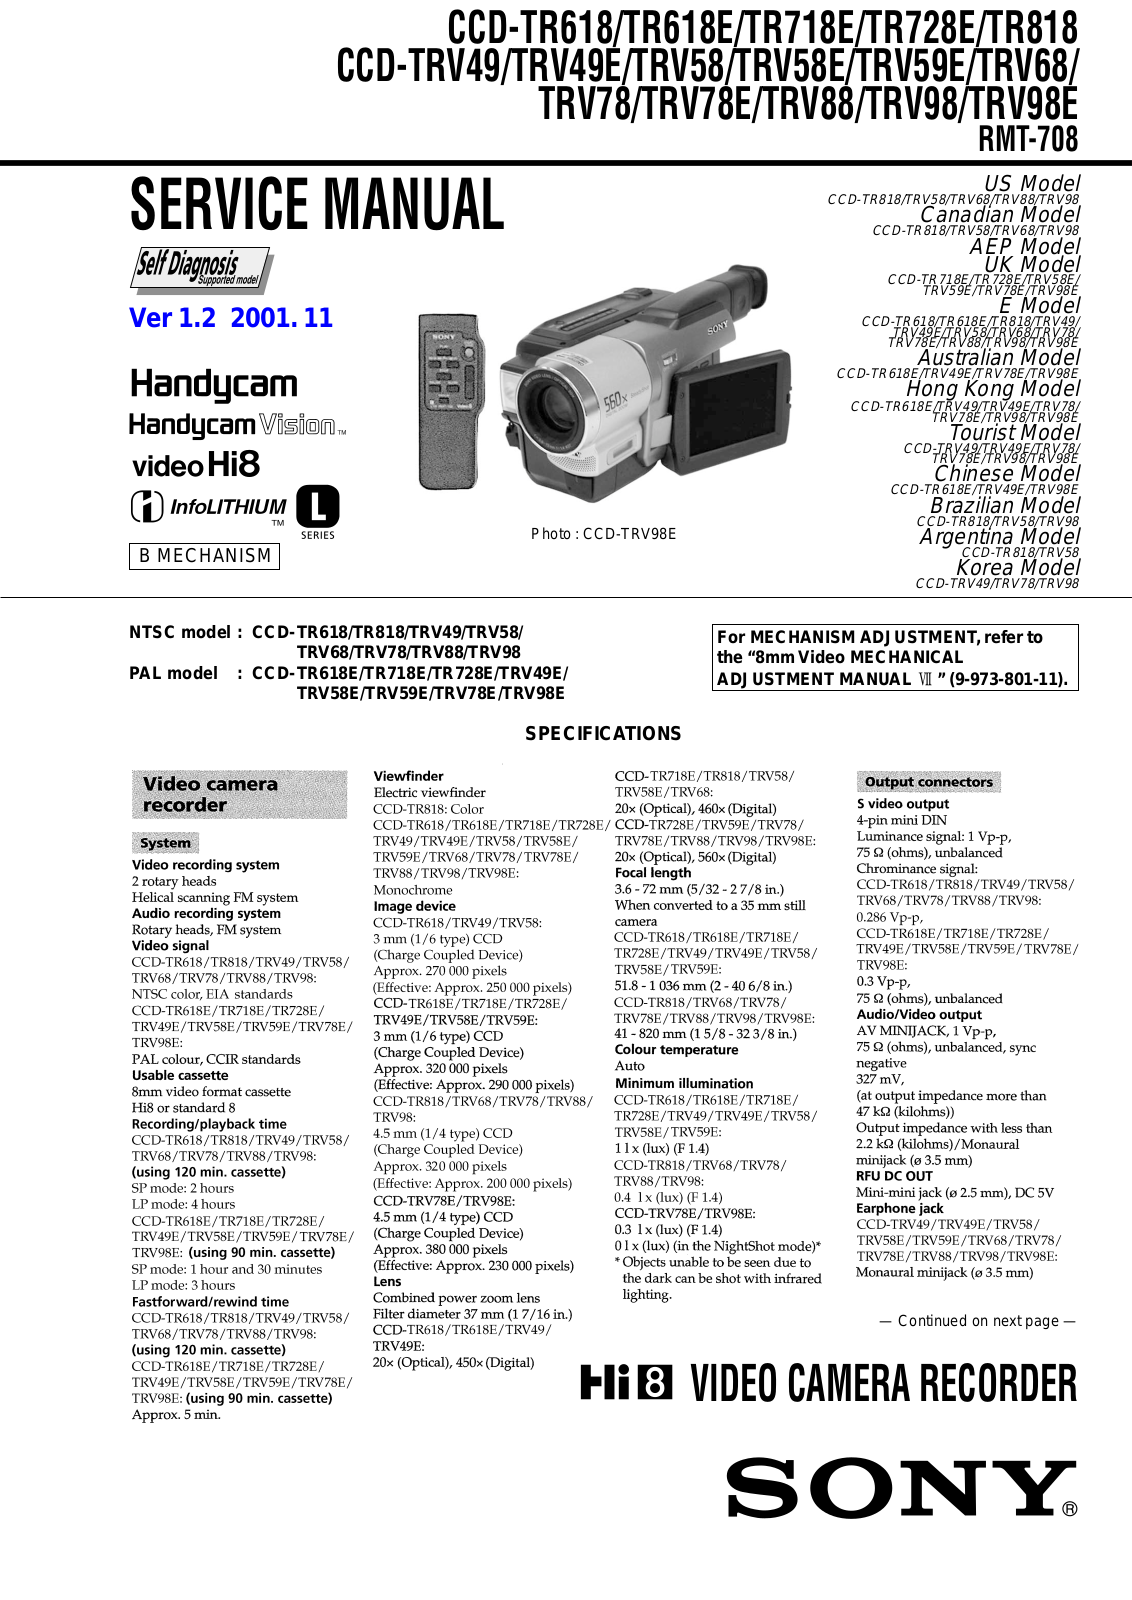 Sony CCD-TR618, CCD-TR718, CCD-TR728, CCD-TR818, CCD-TRV49 Service manual